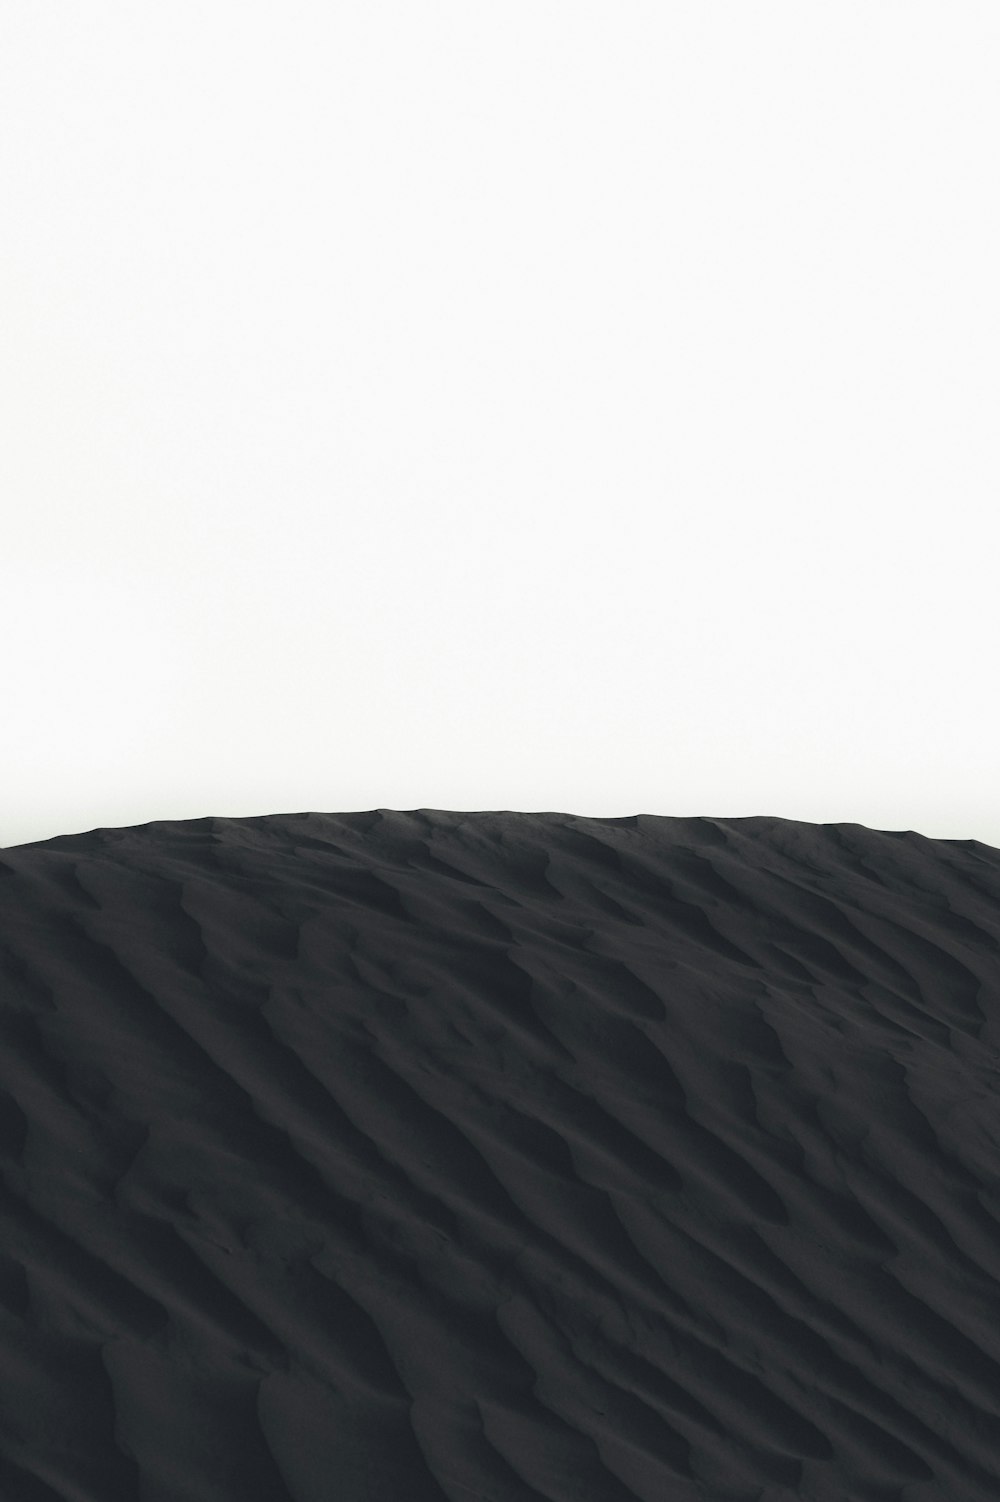 Fotografía de paisaje de dunas de arena